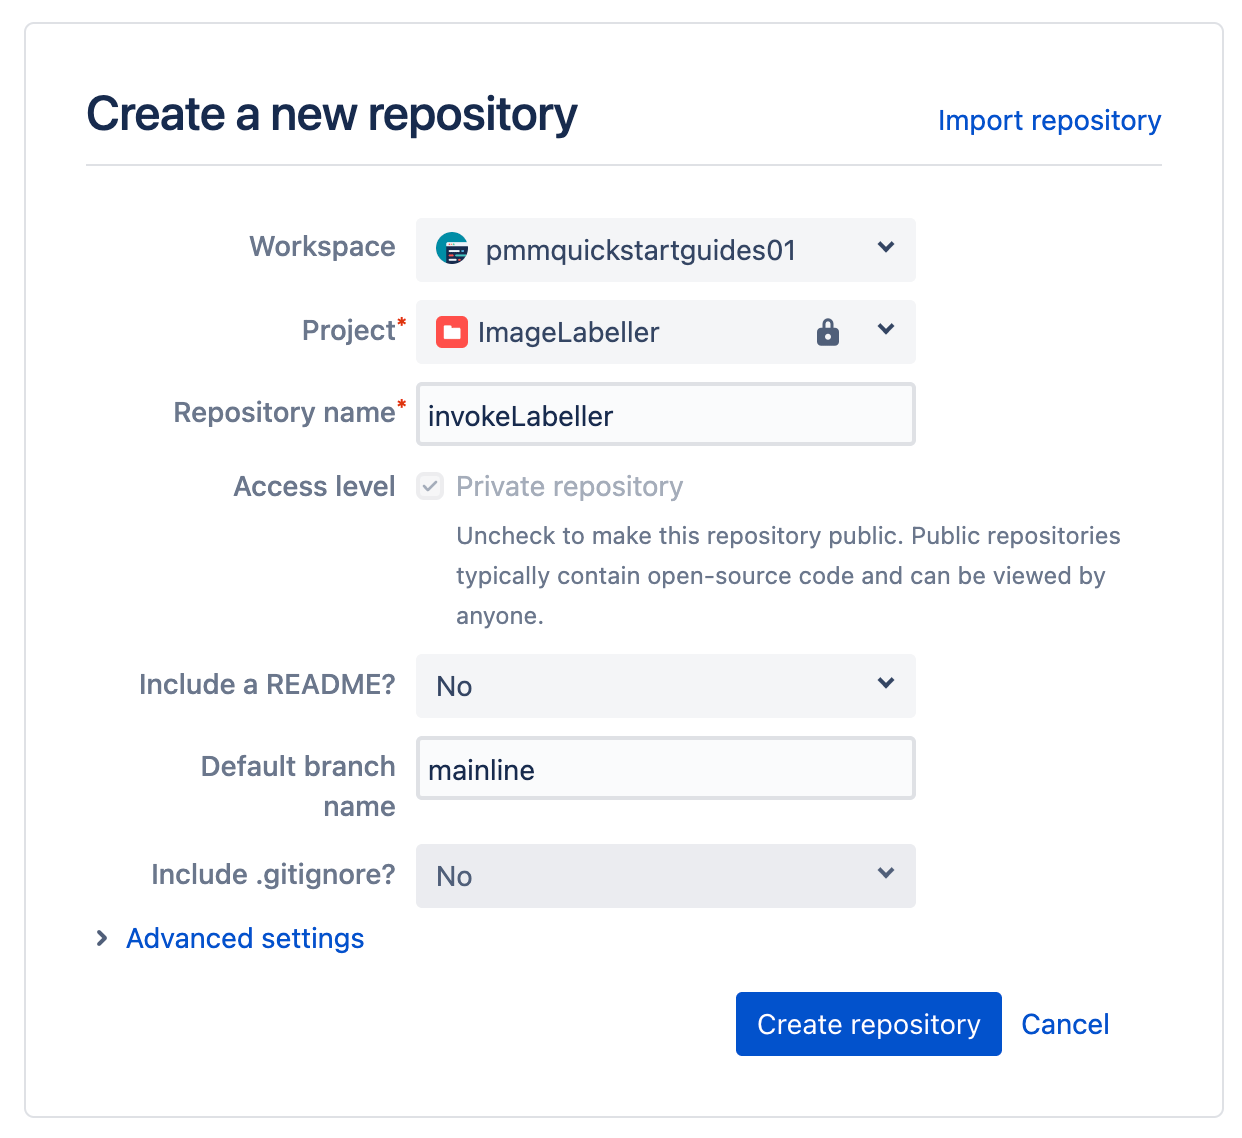 Create invokelabeller repository in Bitbucket